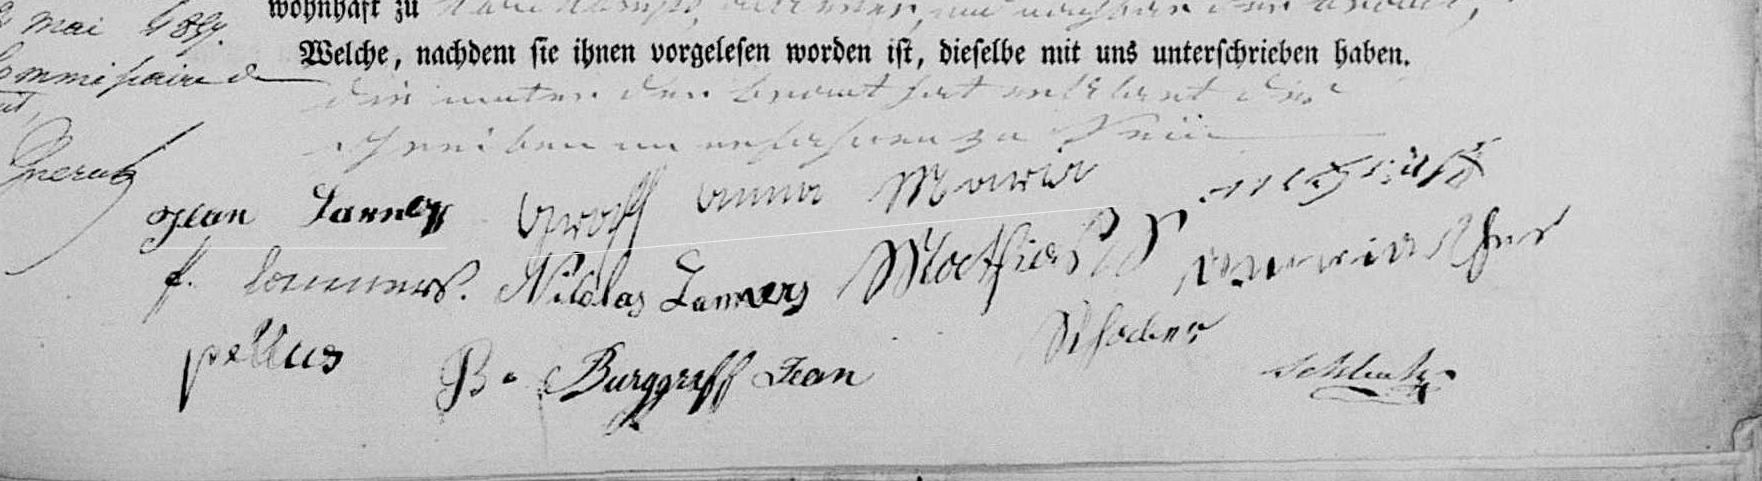 Marriage record Jean Lanners-Anne Marie Graff 13.5.1857 Winseler